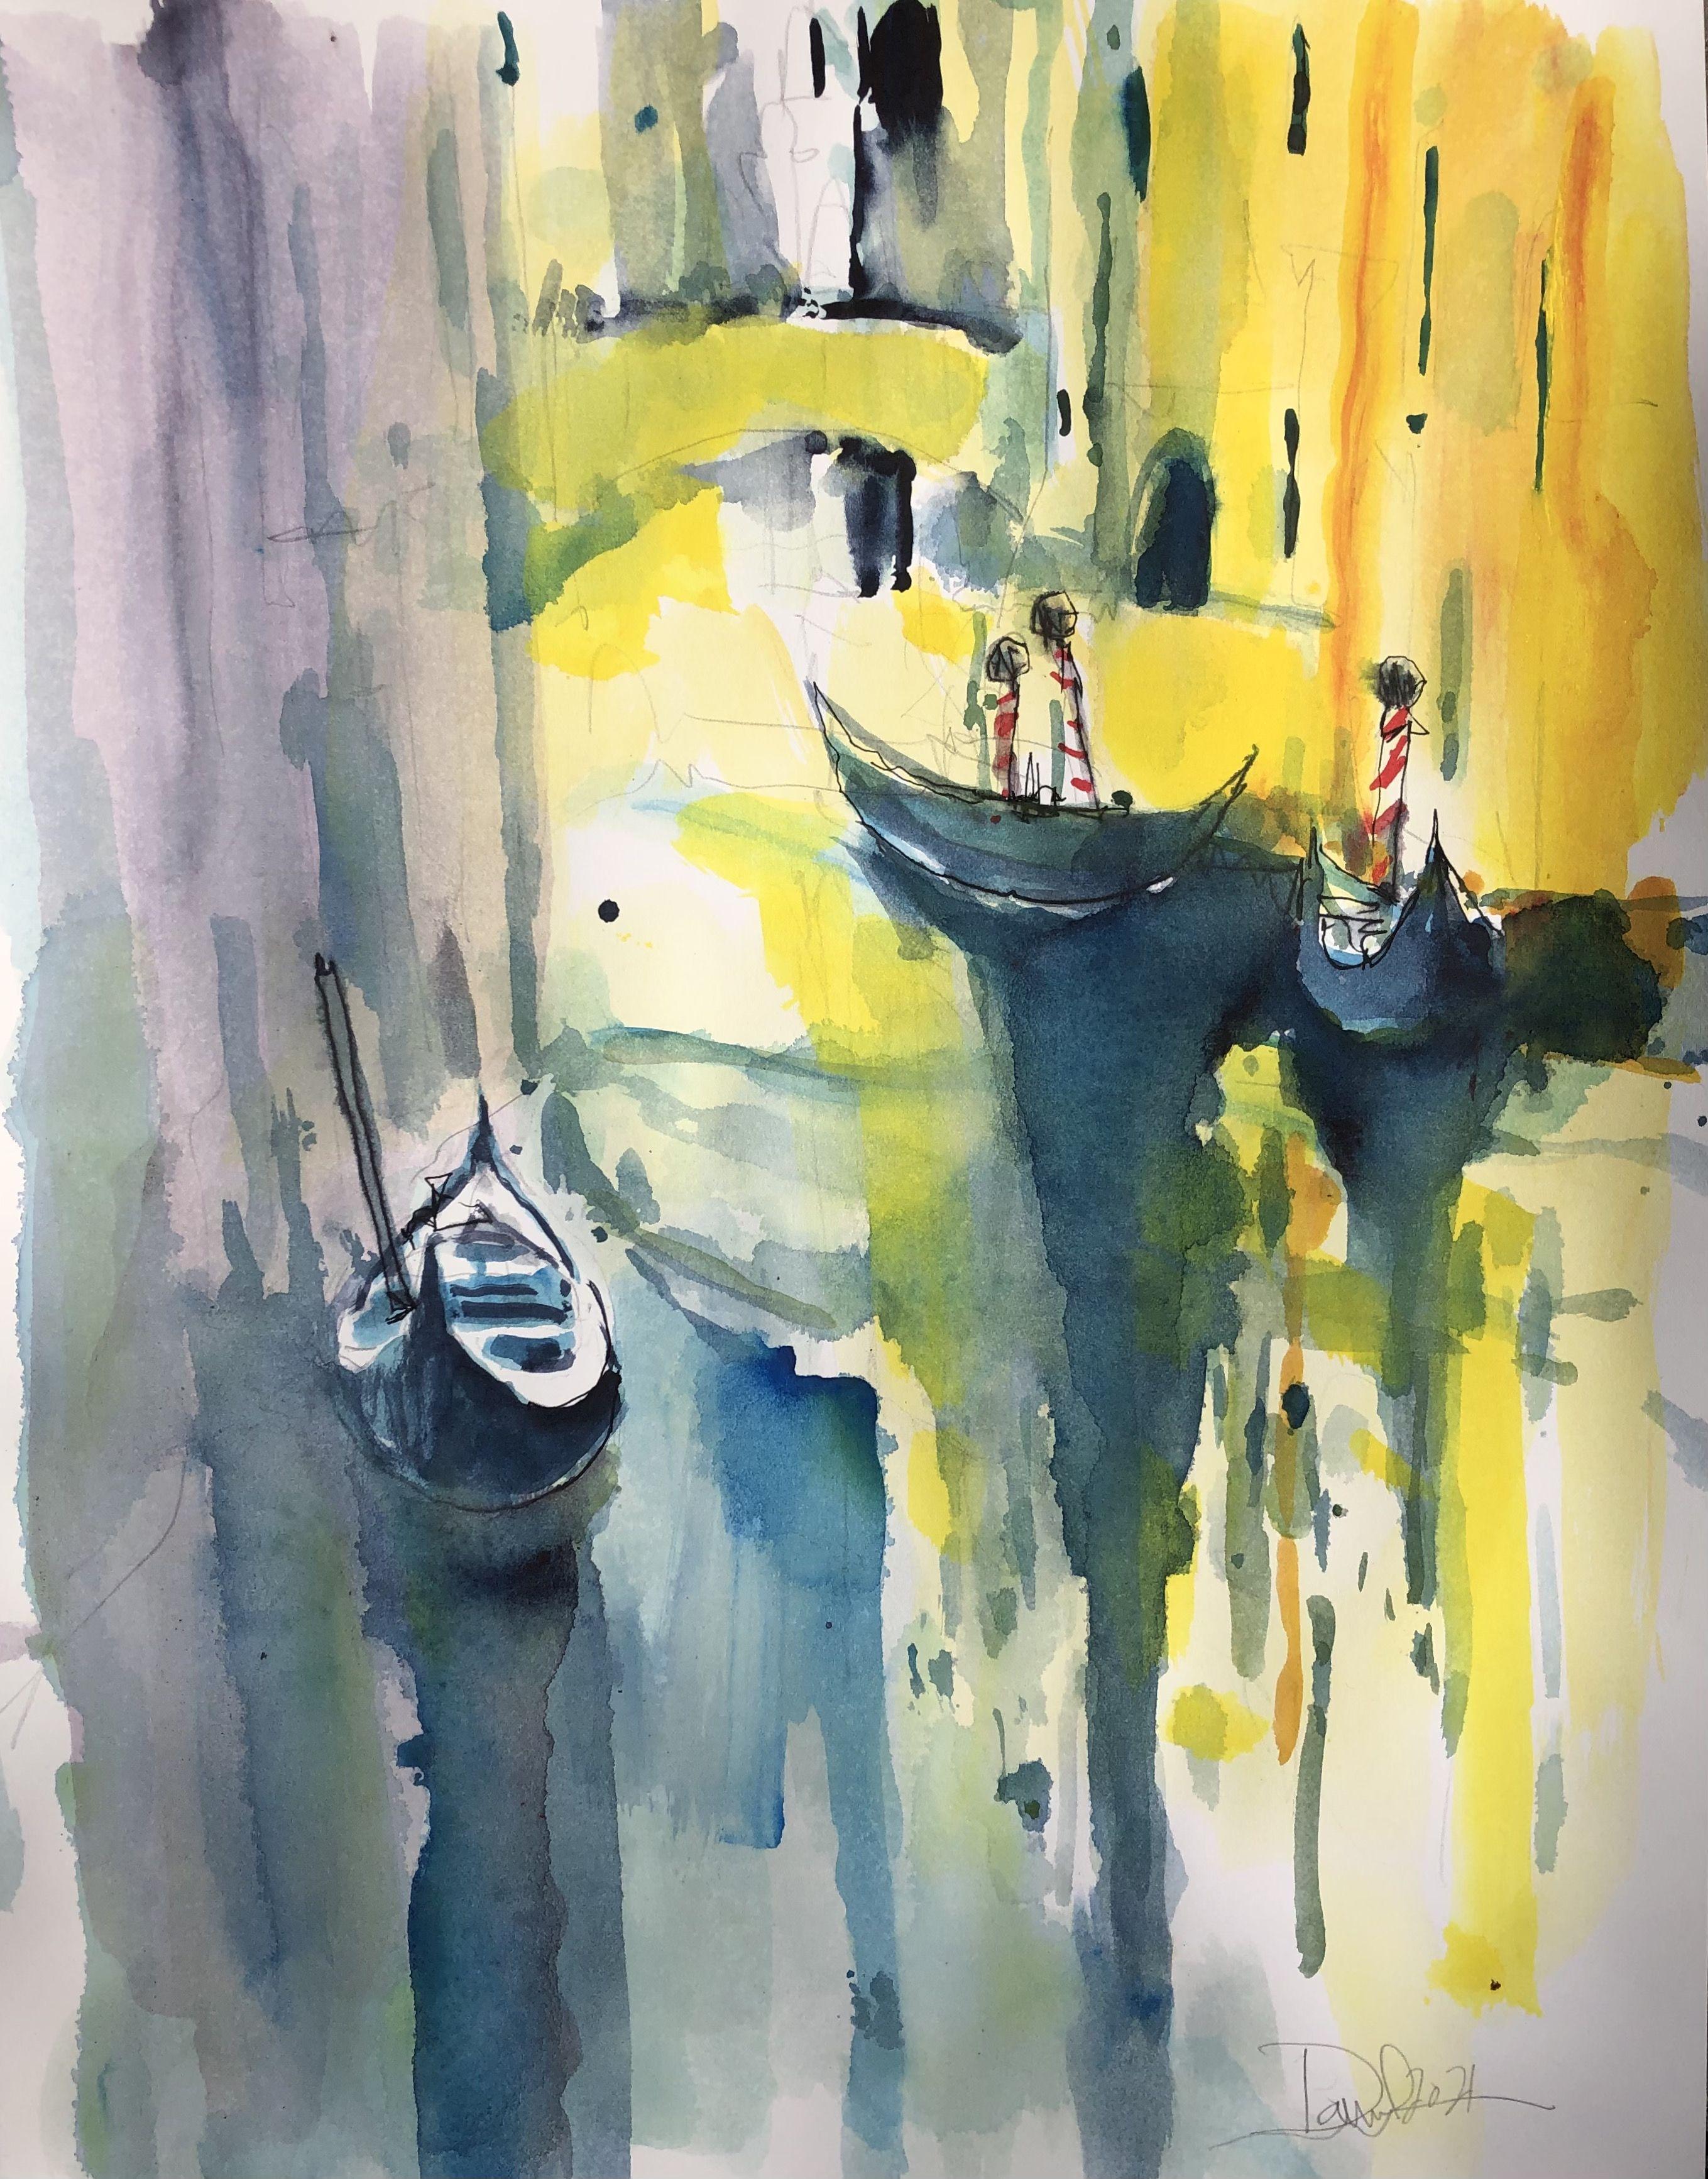 Gondola Shadows, Painting, Watercolor on Watercolor Paper - Art by Daniel Clarke